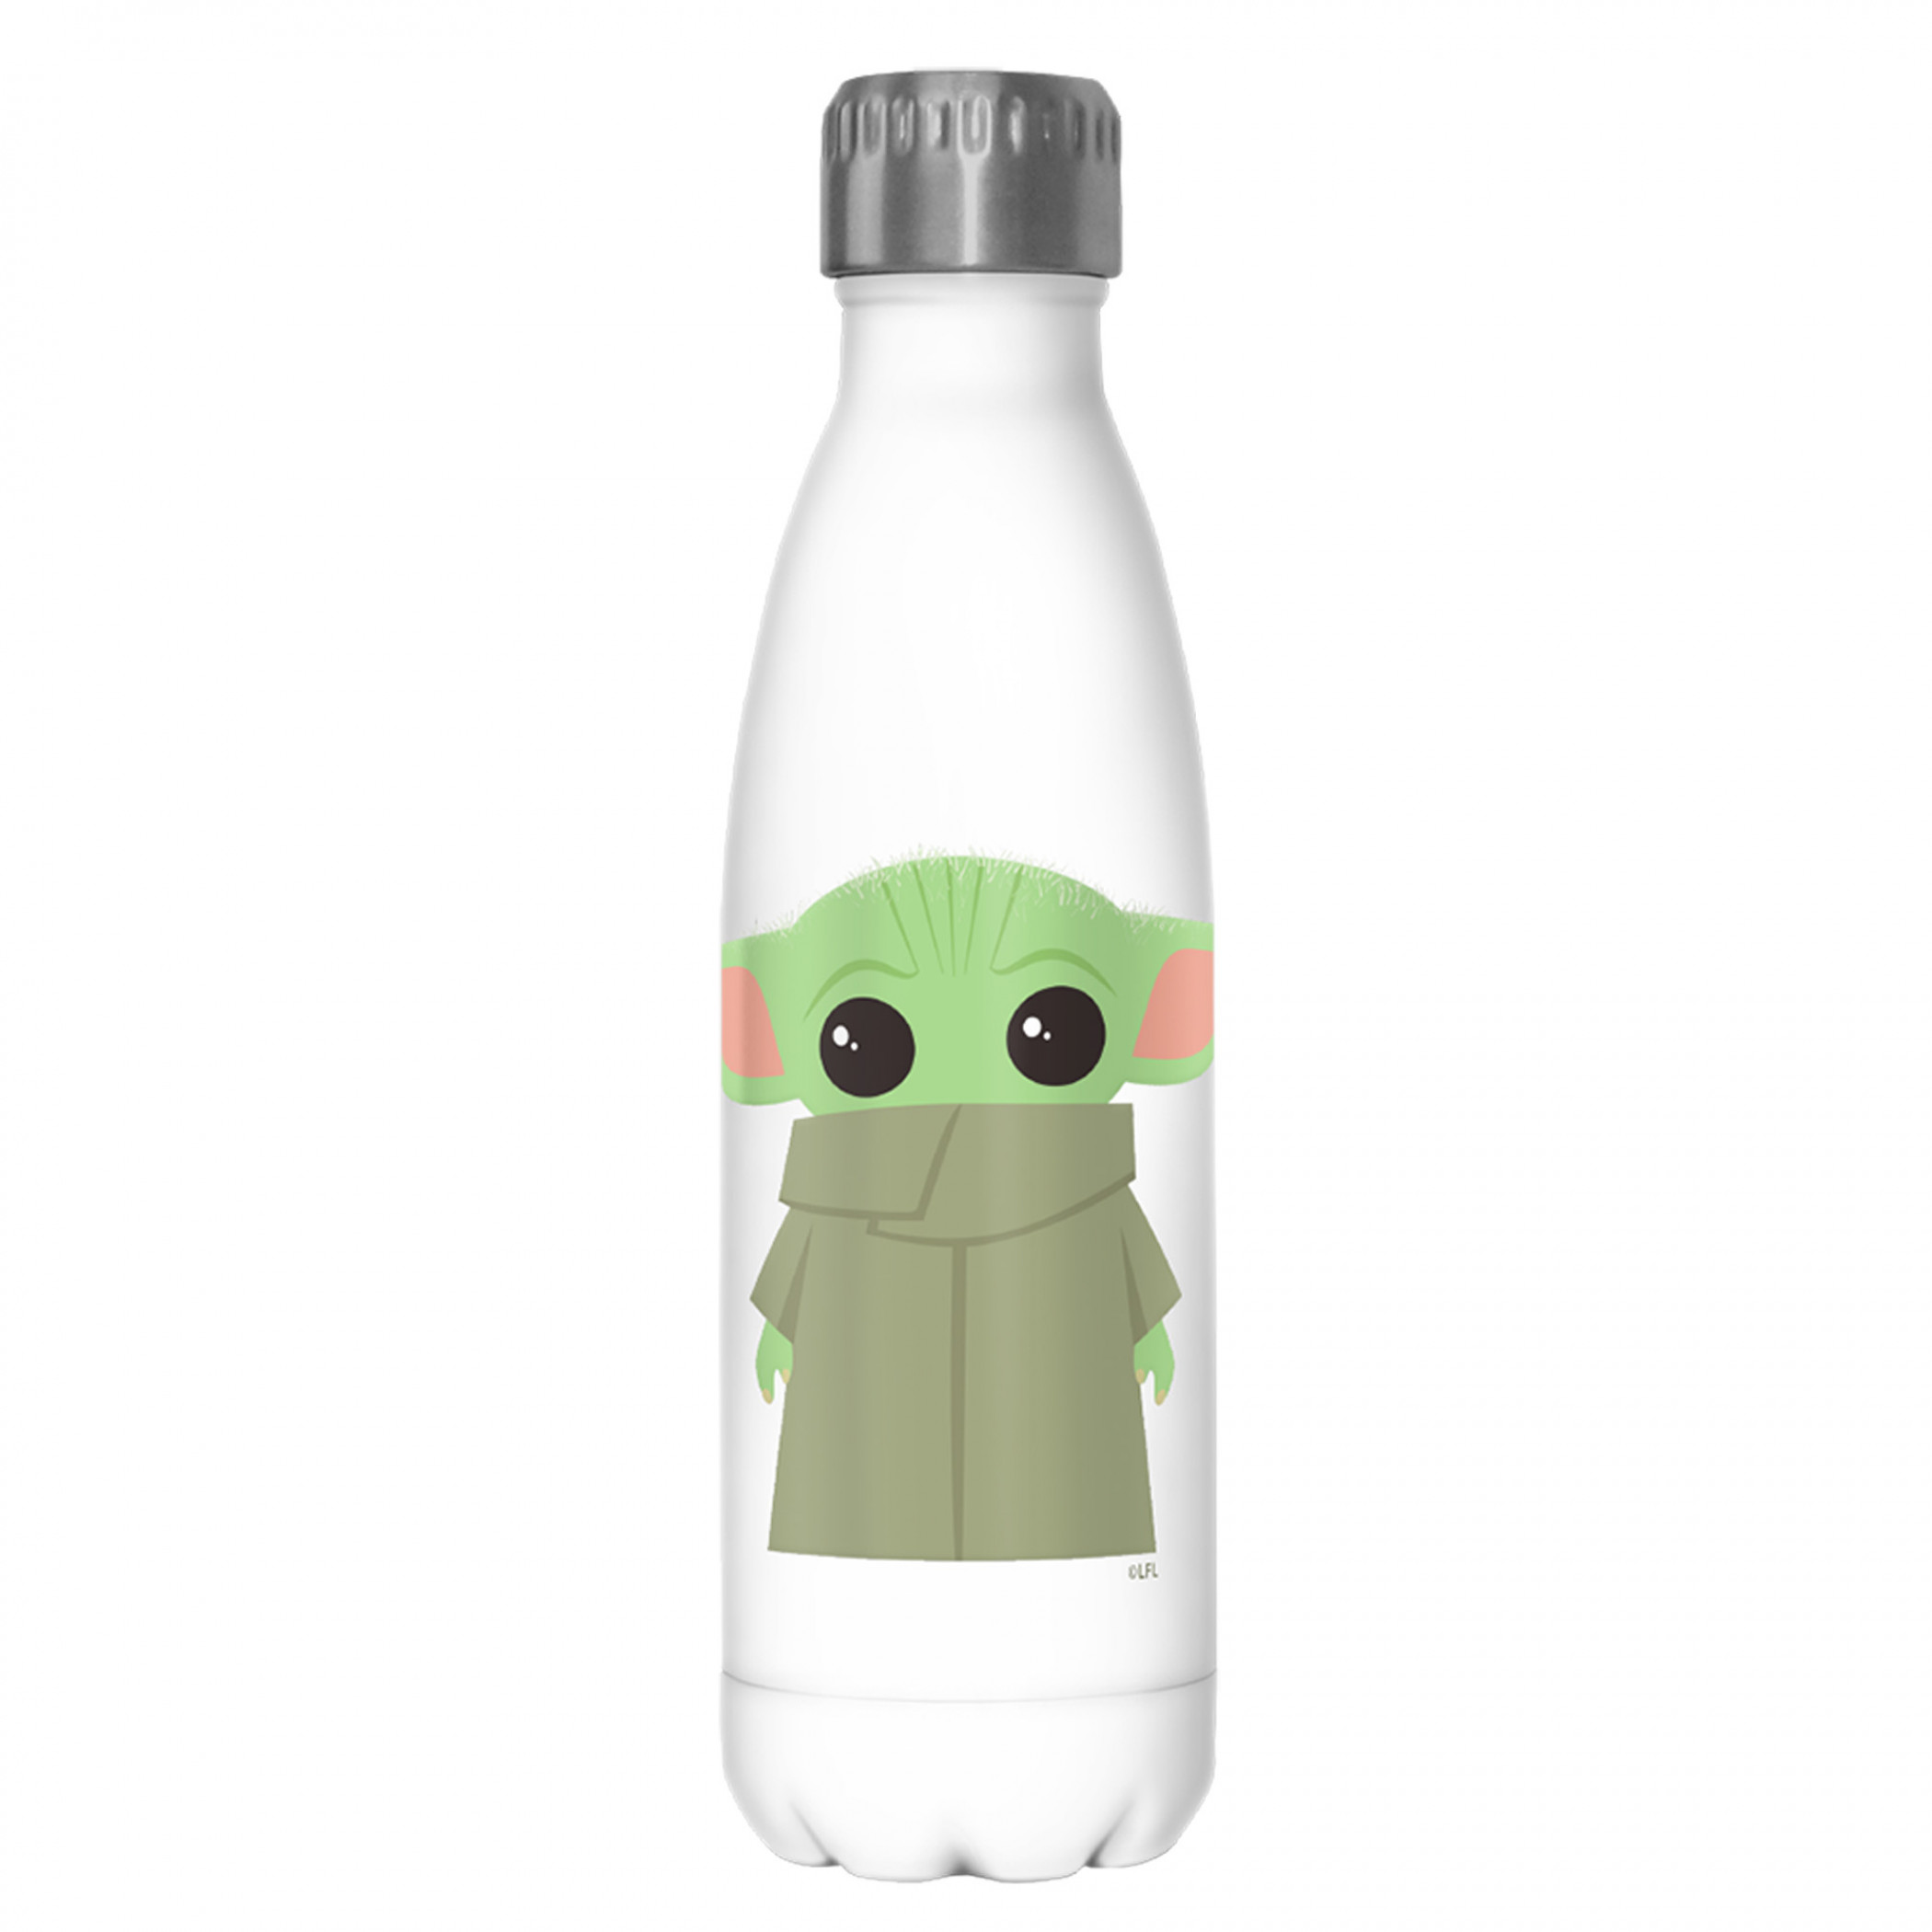 Star Wars Adorable Grogu 17oz Steel Water Bottle